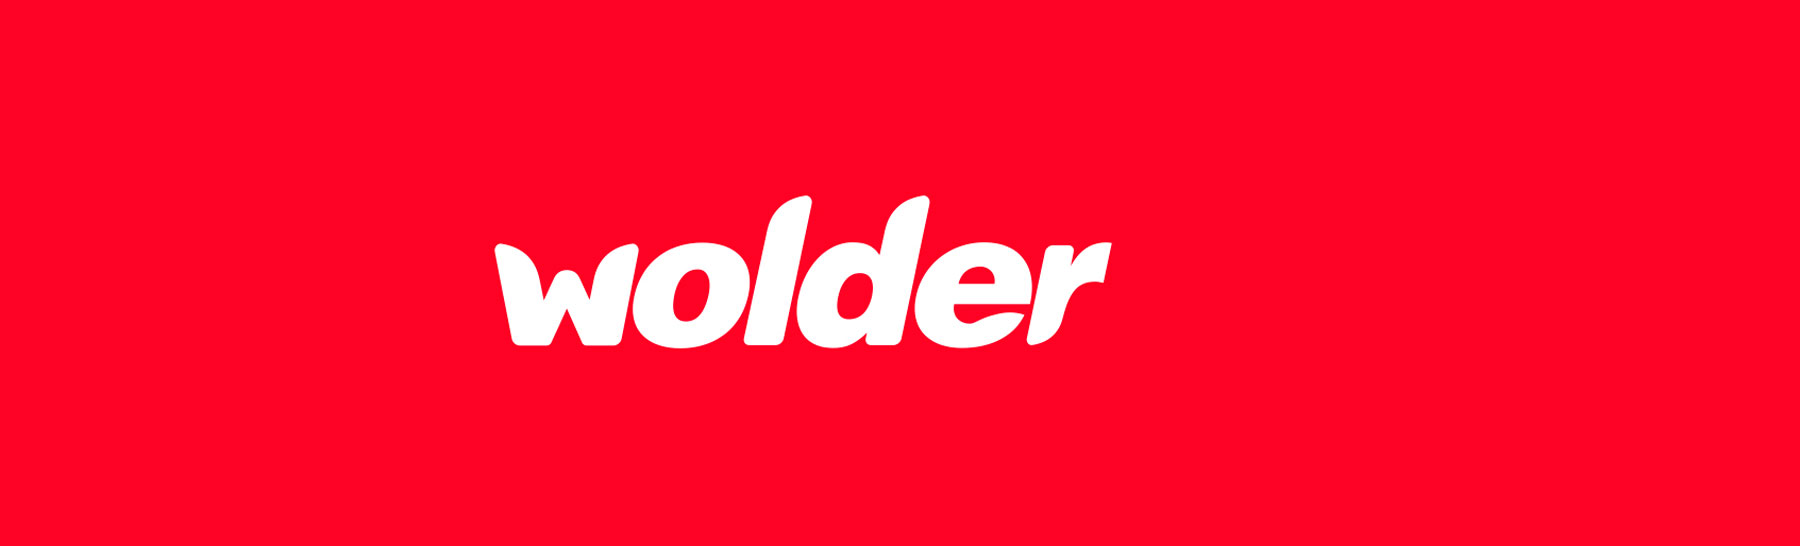 Wolder logo